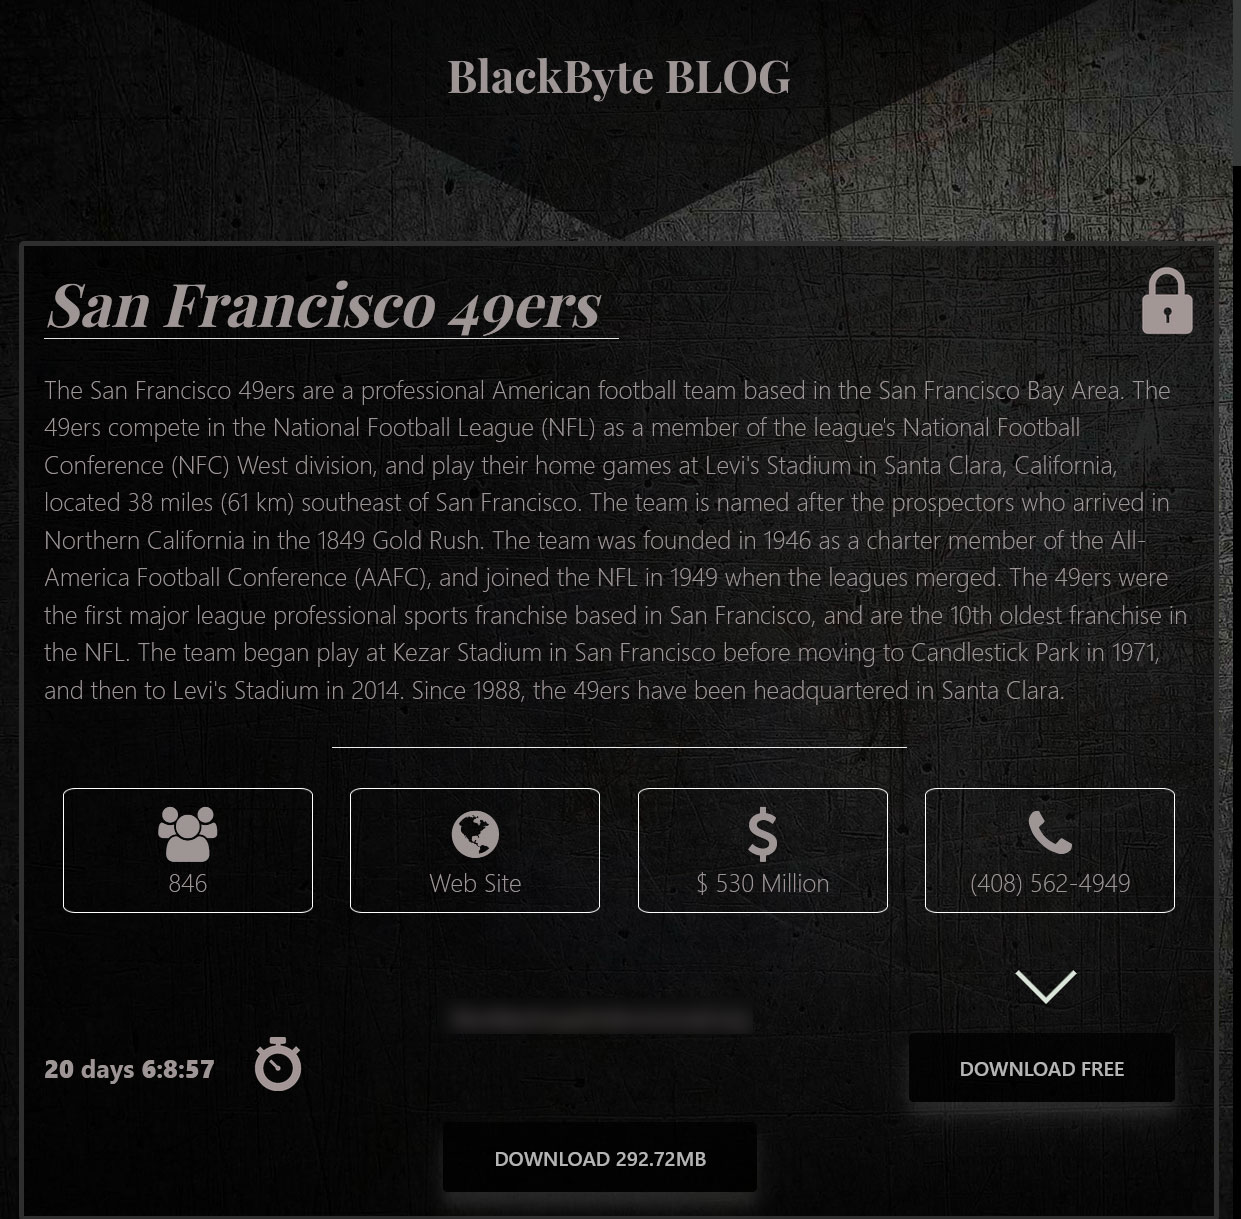  BlackByte ransomware leaking the San Francisco 49ers' data